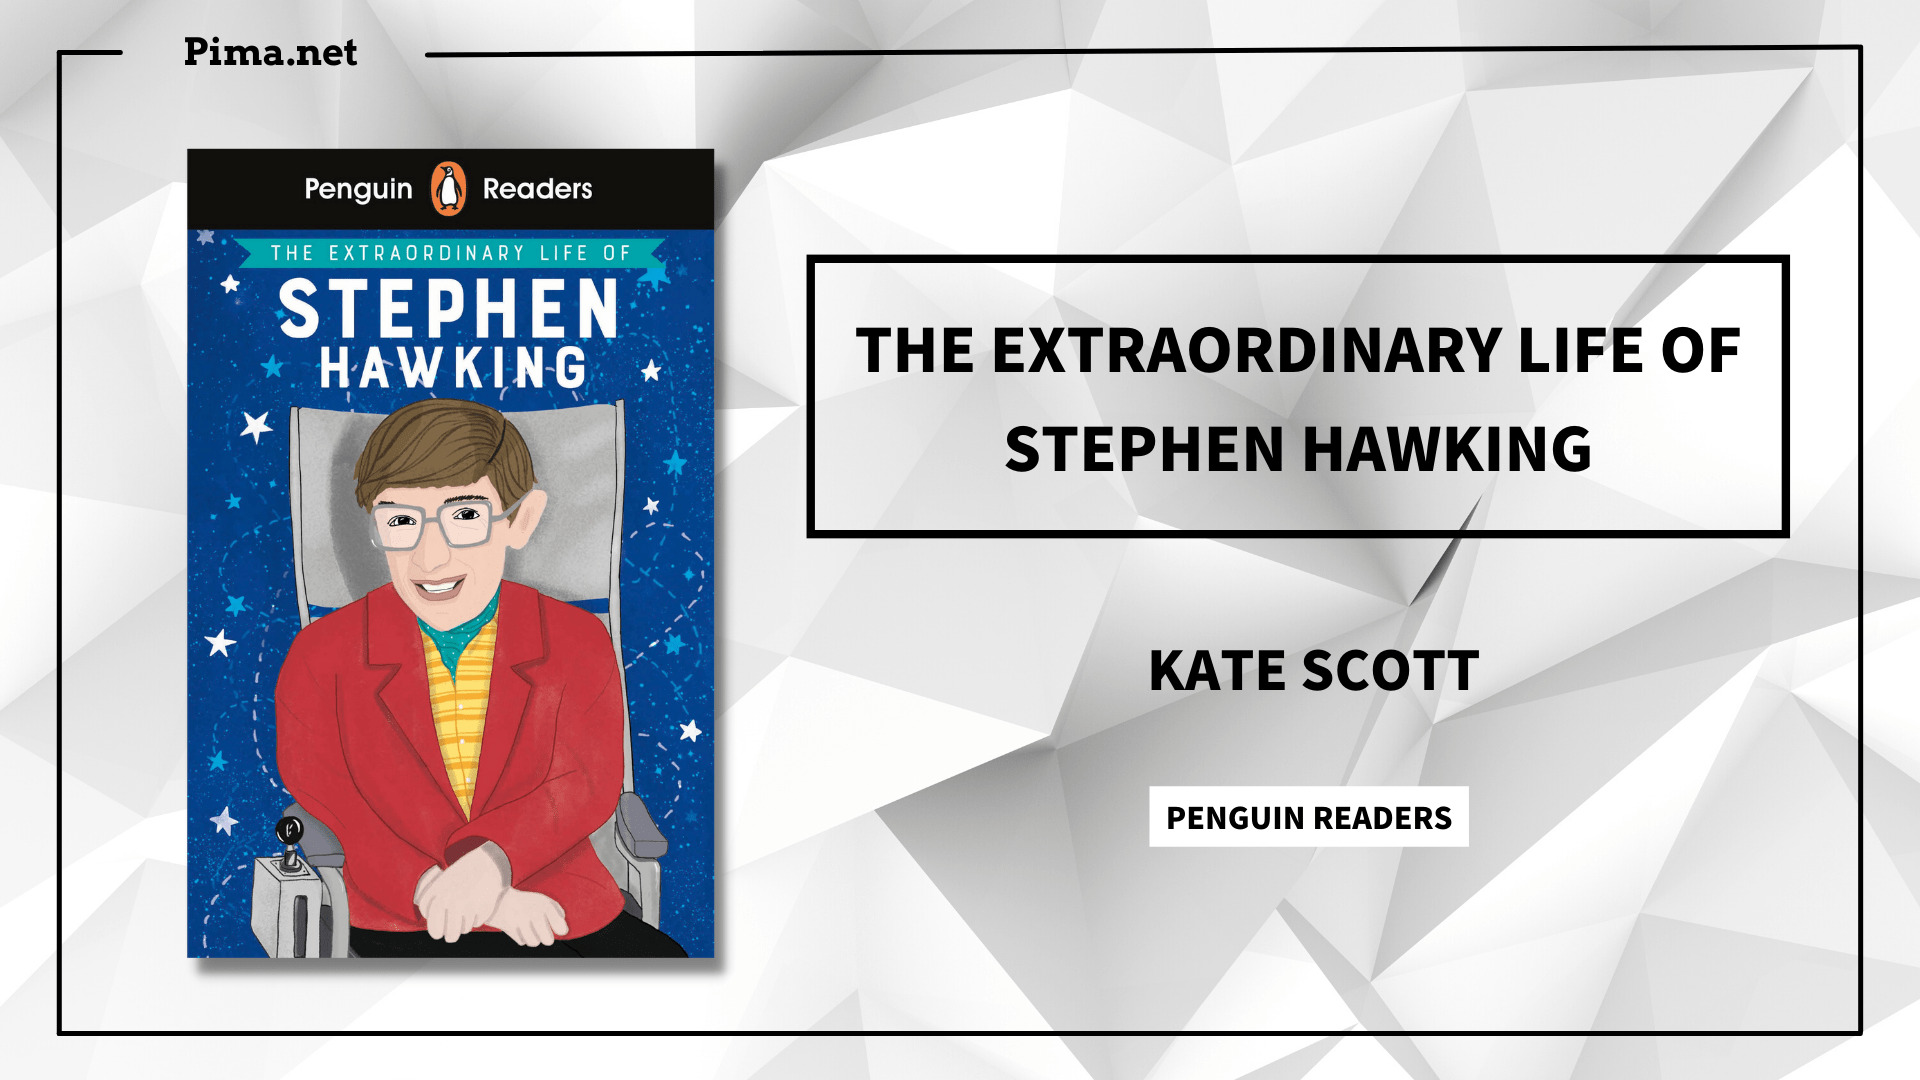 Penguin Readers "Stephen Hawking"